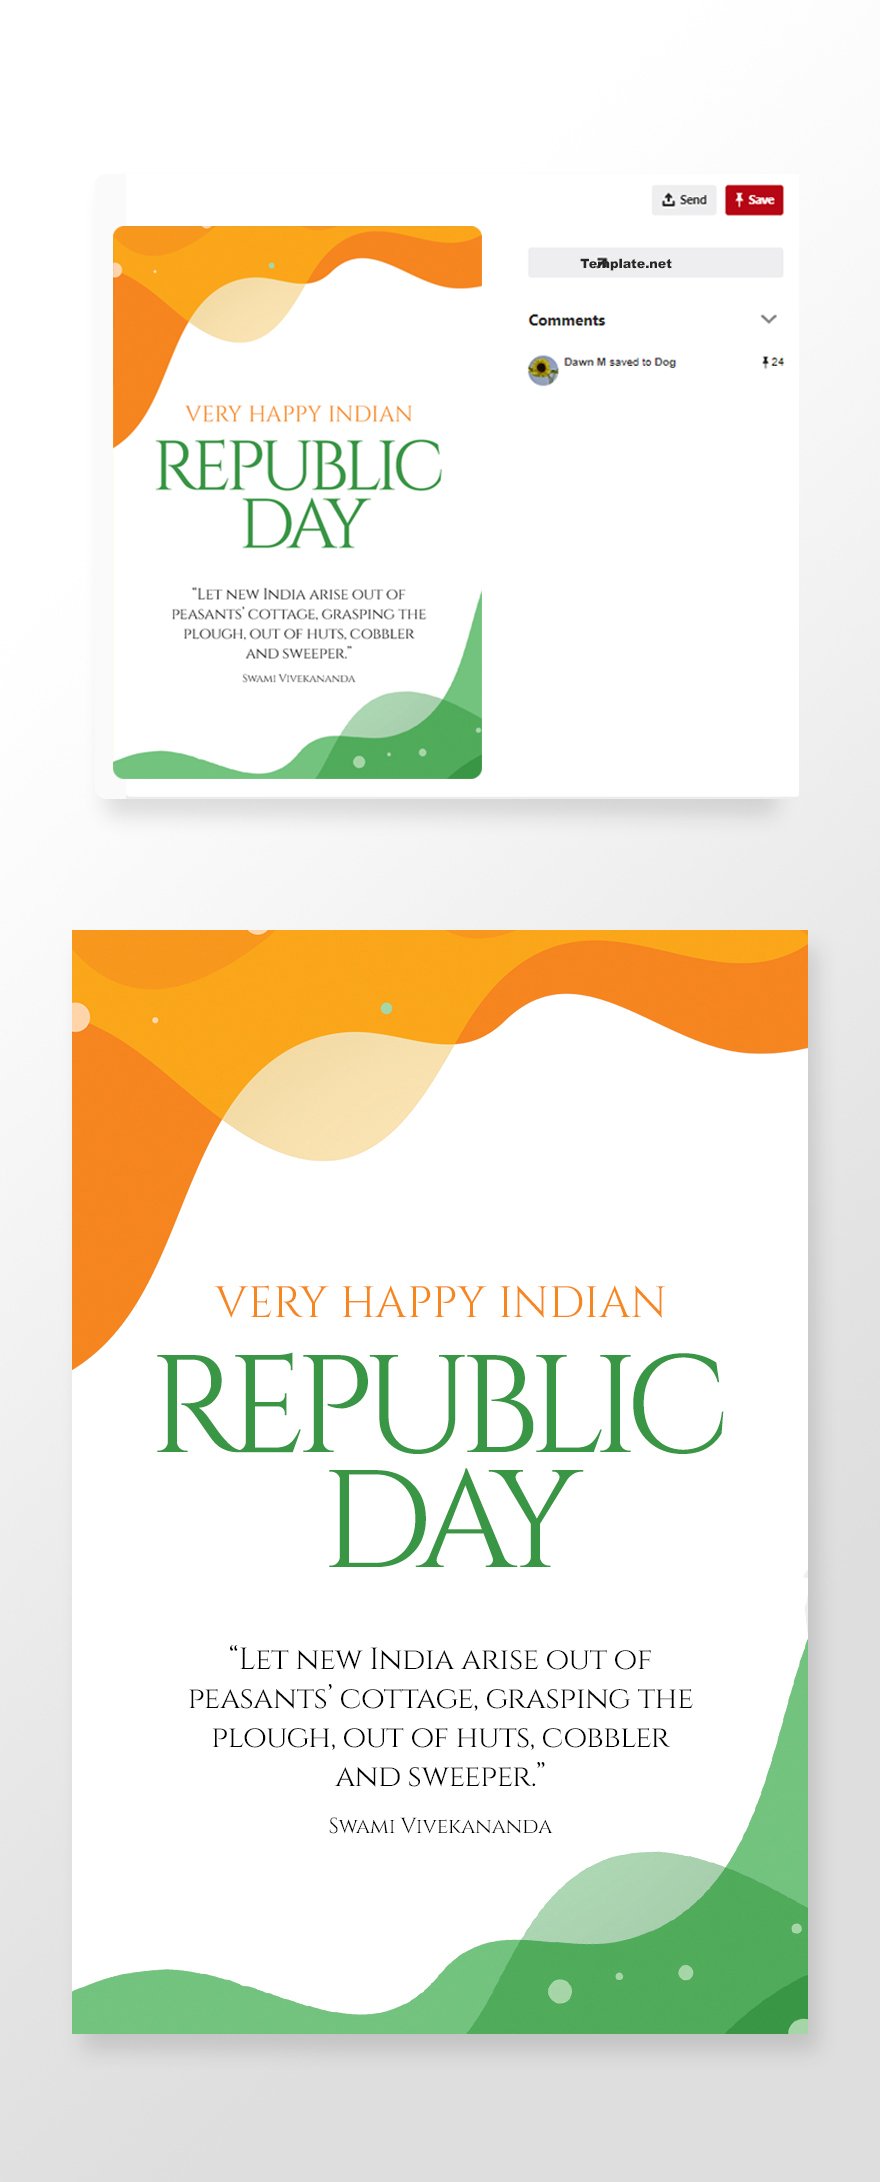 Republic Day Pinterest Pin Template